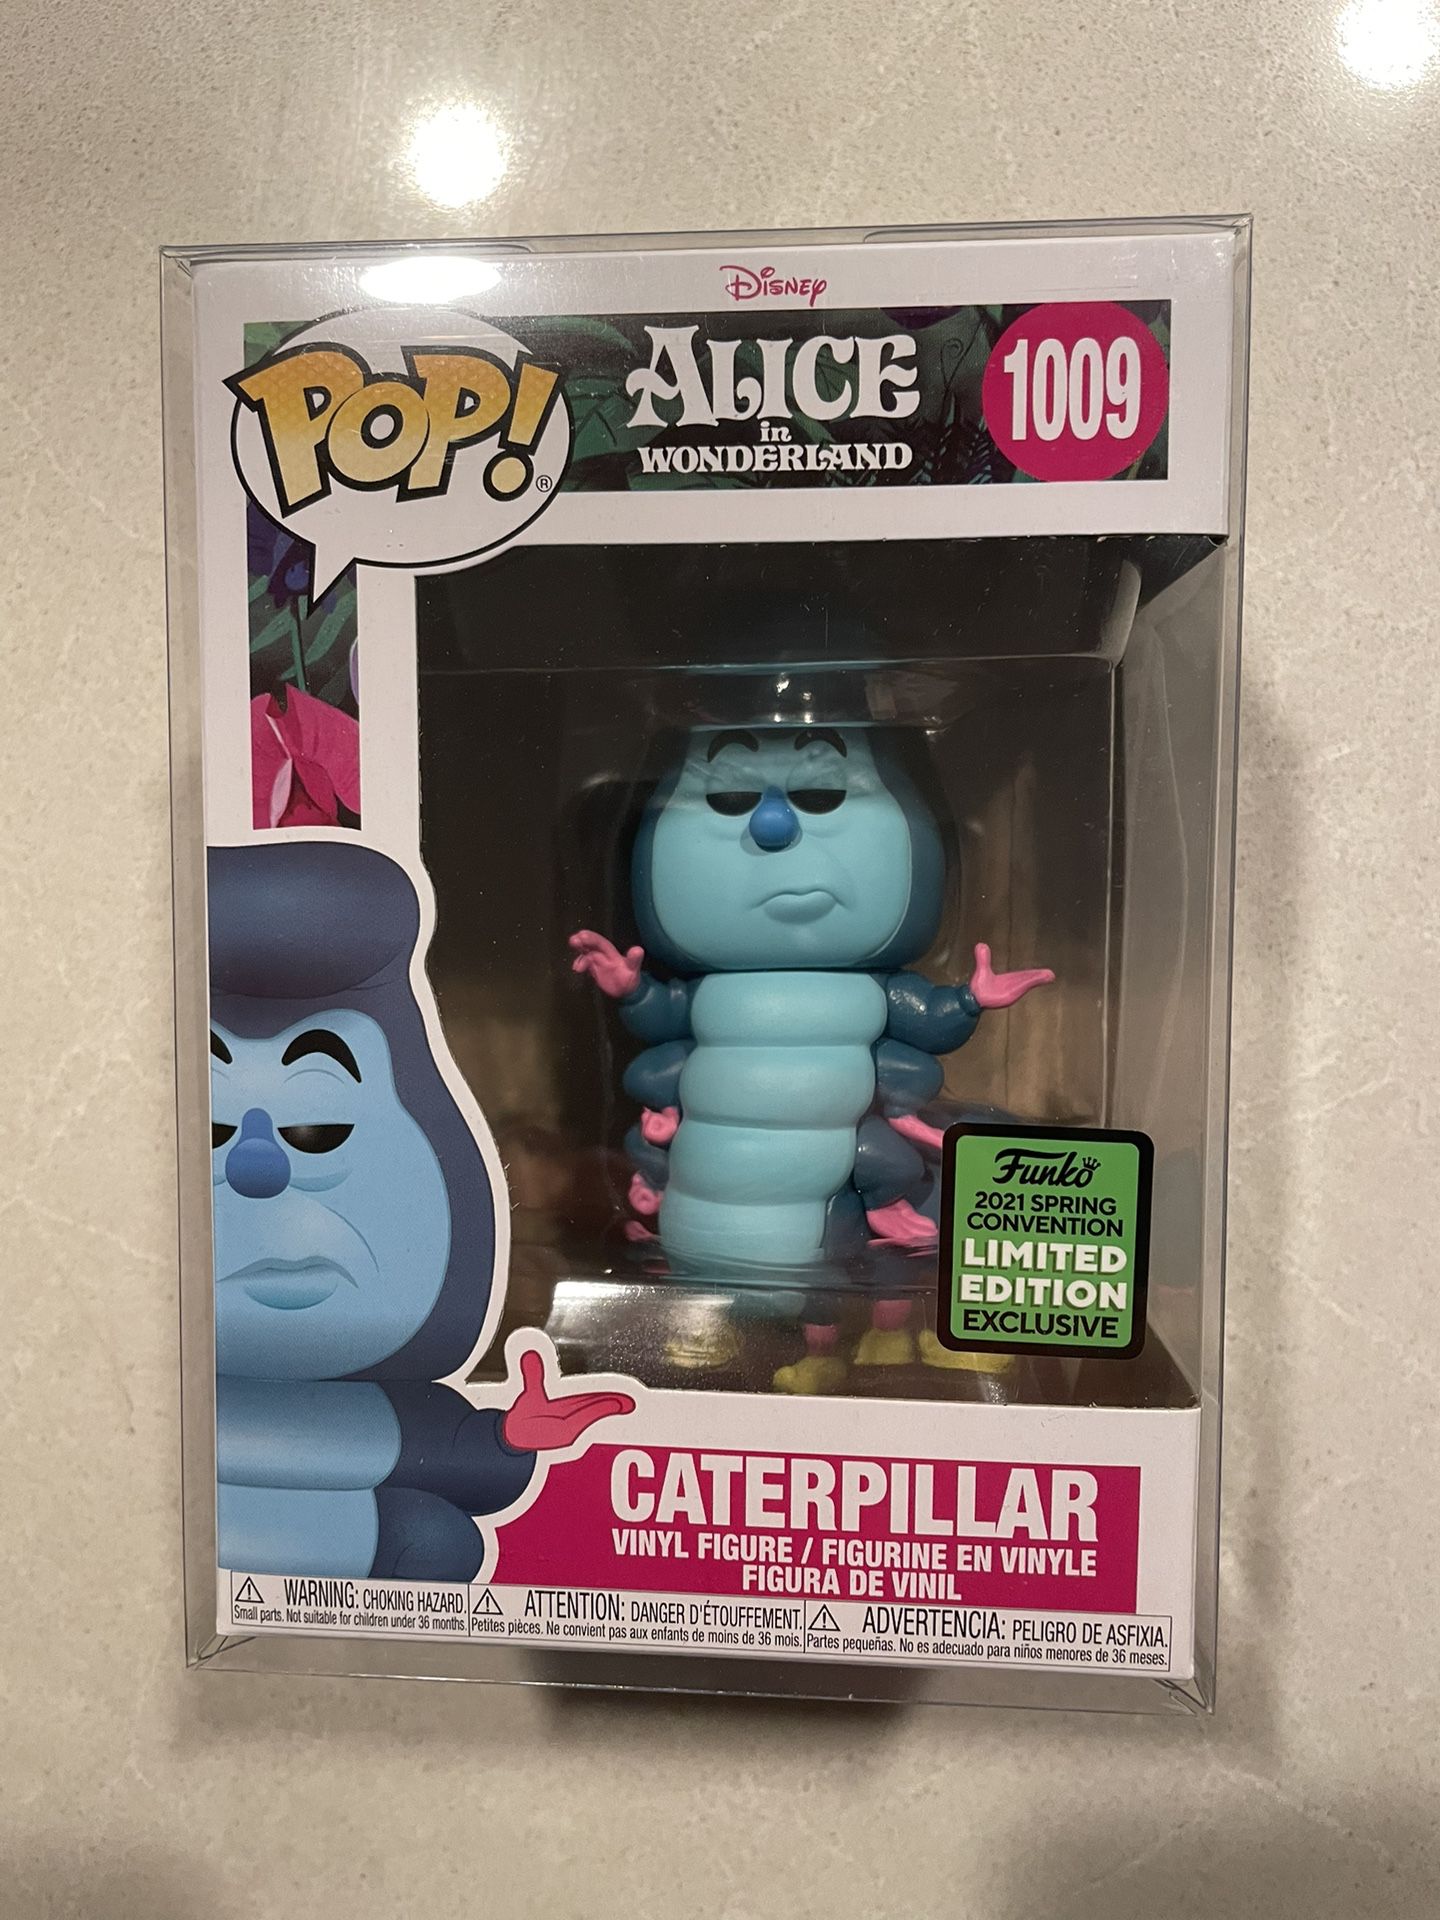 Caterpillar Funko Pop *MINT* 2021 ECCC Spring Convention Exclusive Disney Alice Wonderland 1009 with protector